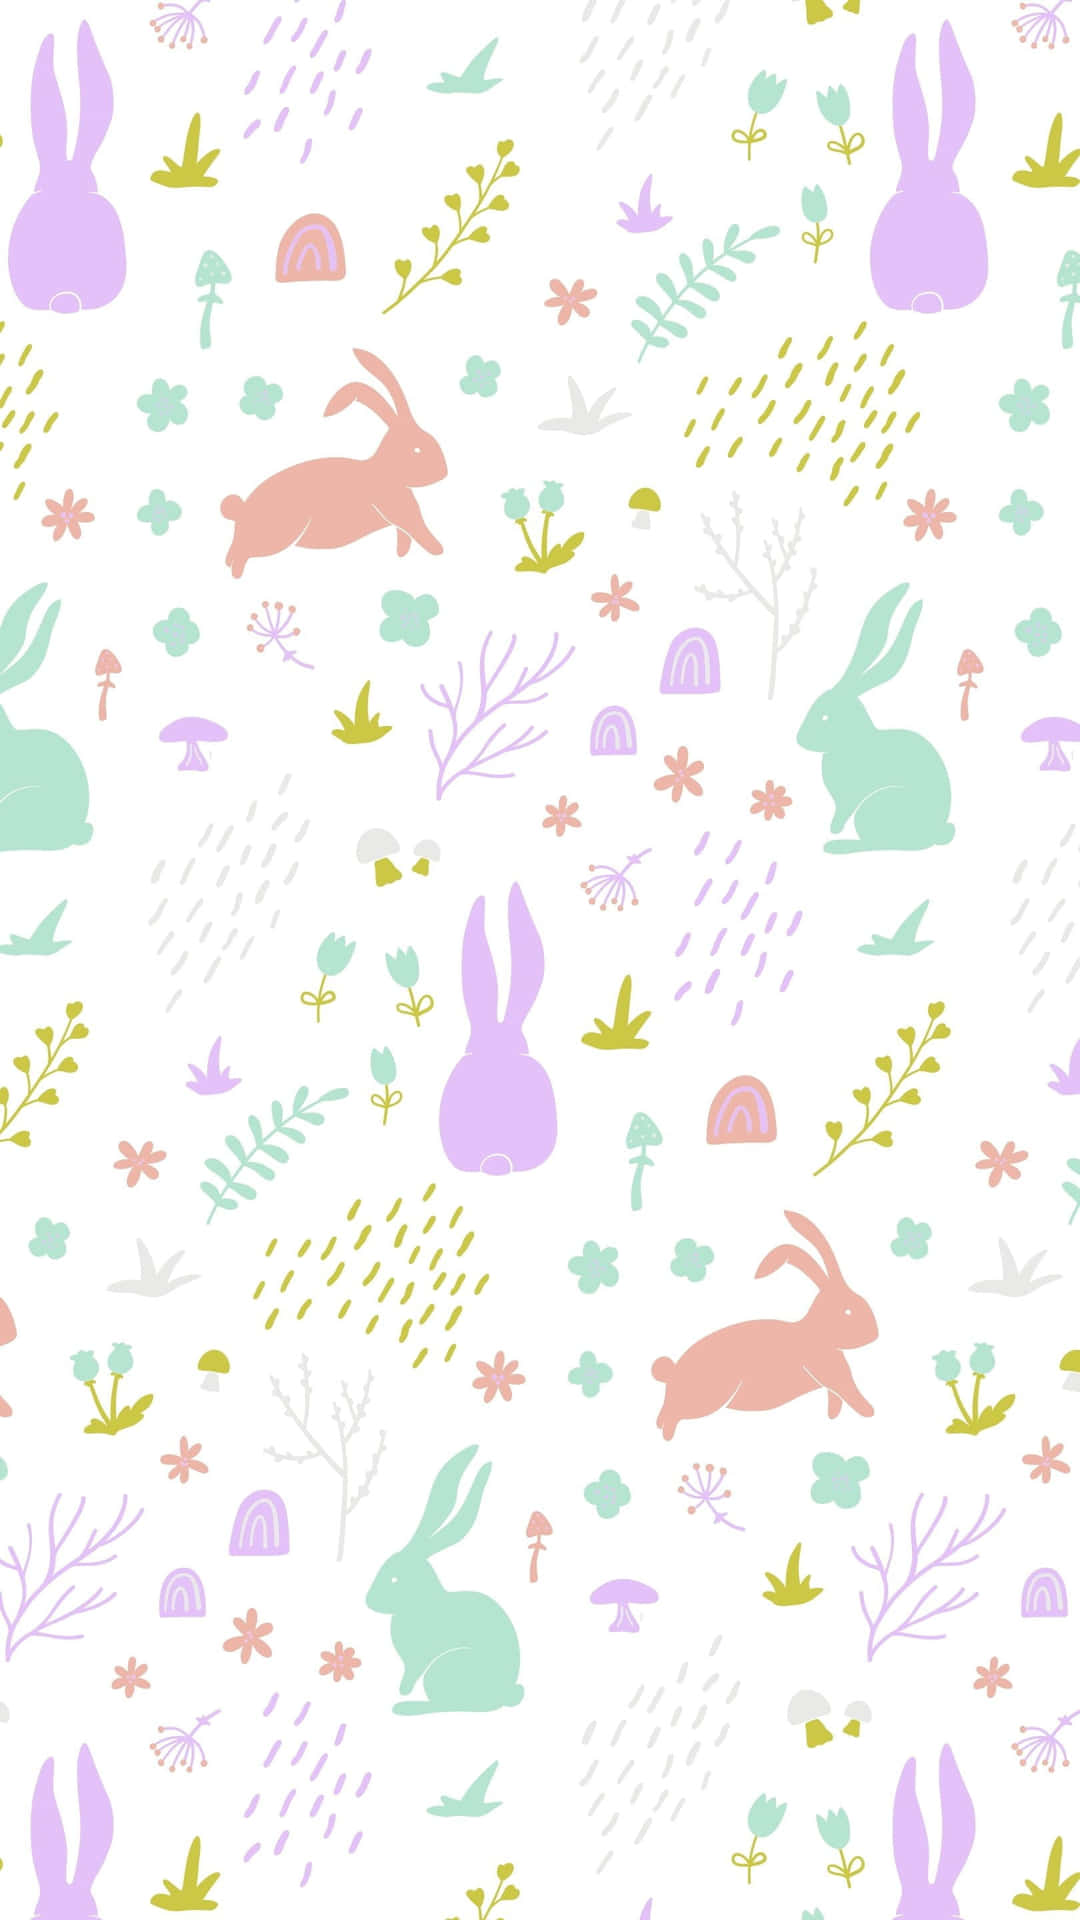 A cute and cuddly Kawaii Bunny Wallpaper